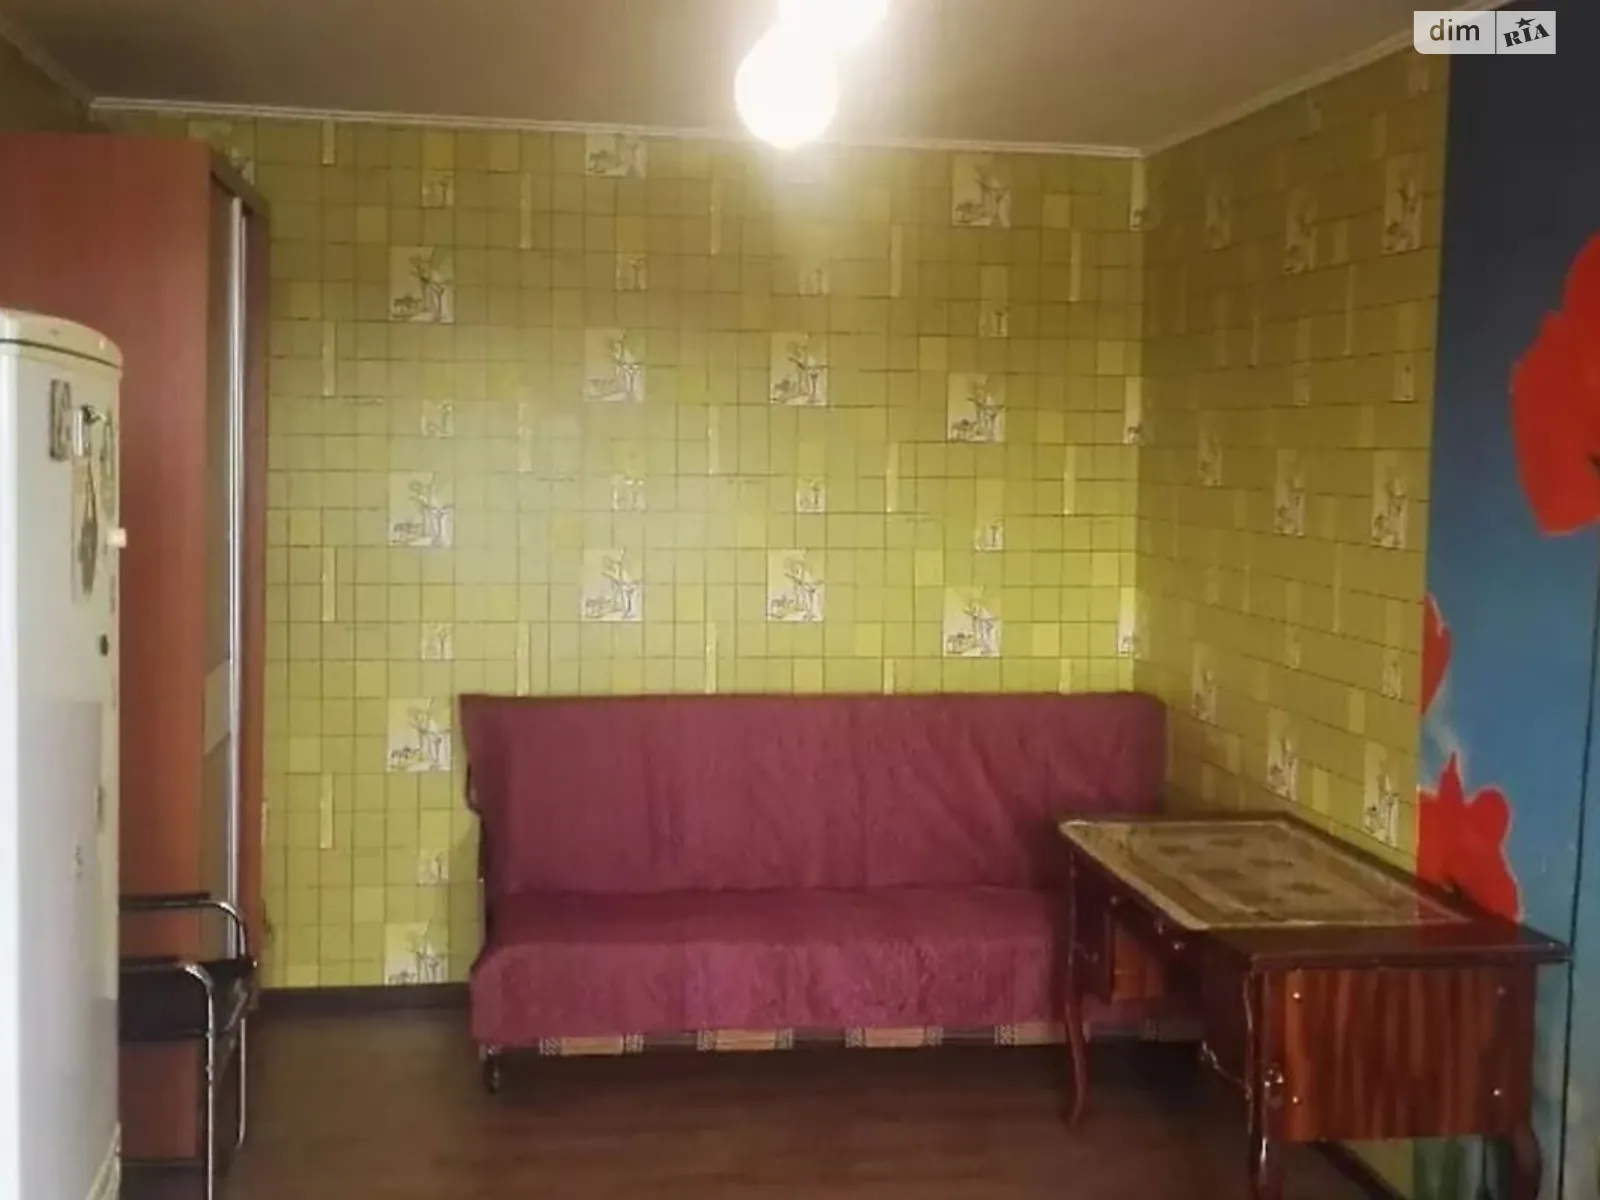 Продается комната 29 кв. м в Киеве, цена: 20000 $ - фото 1